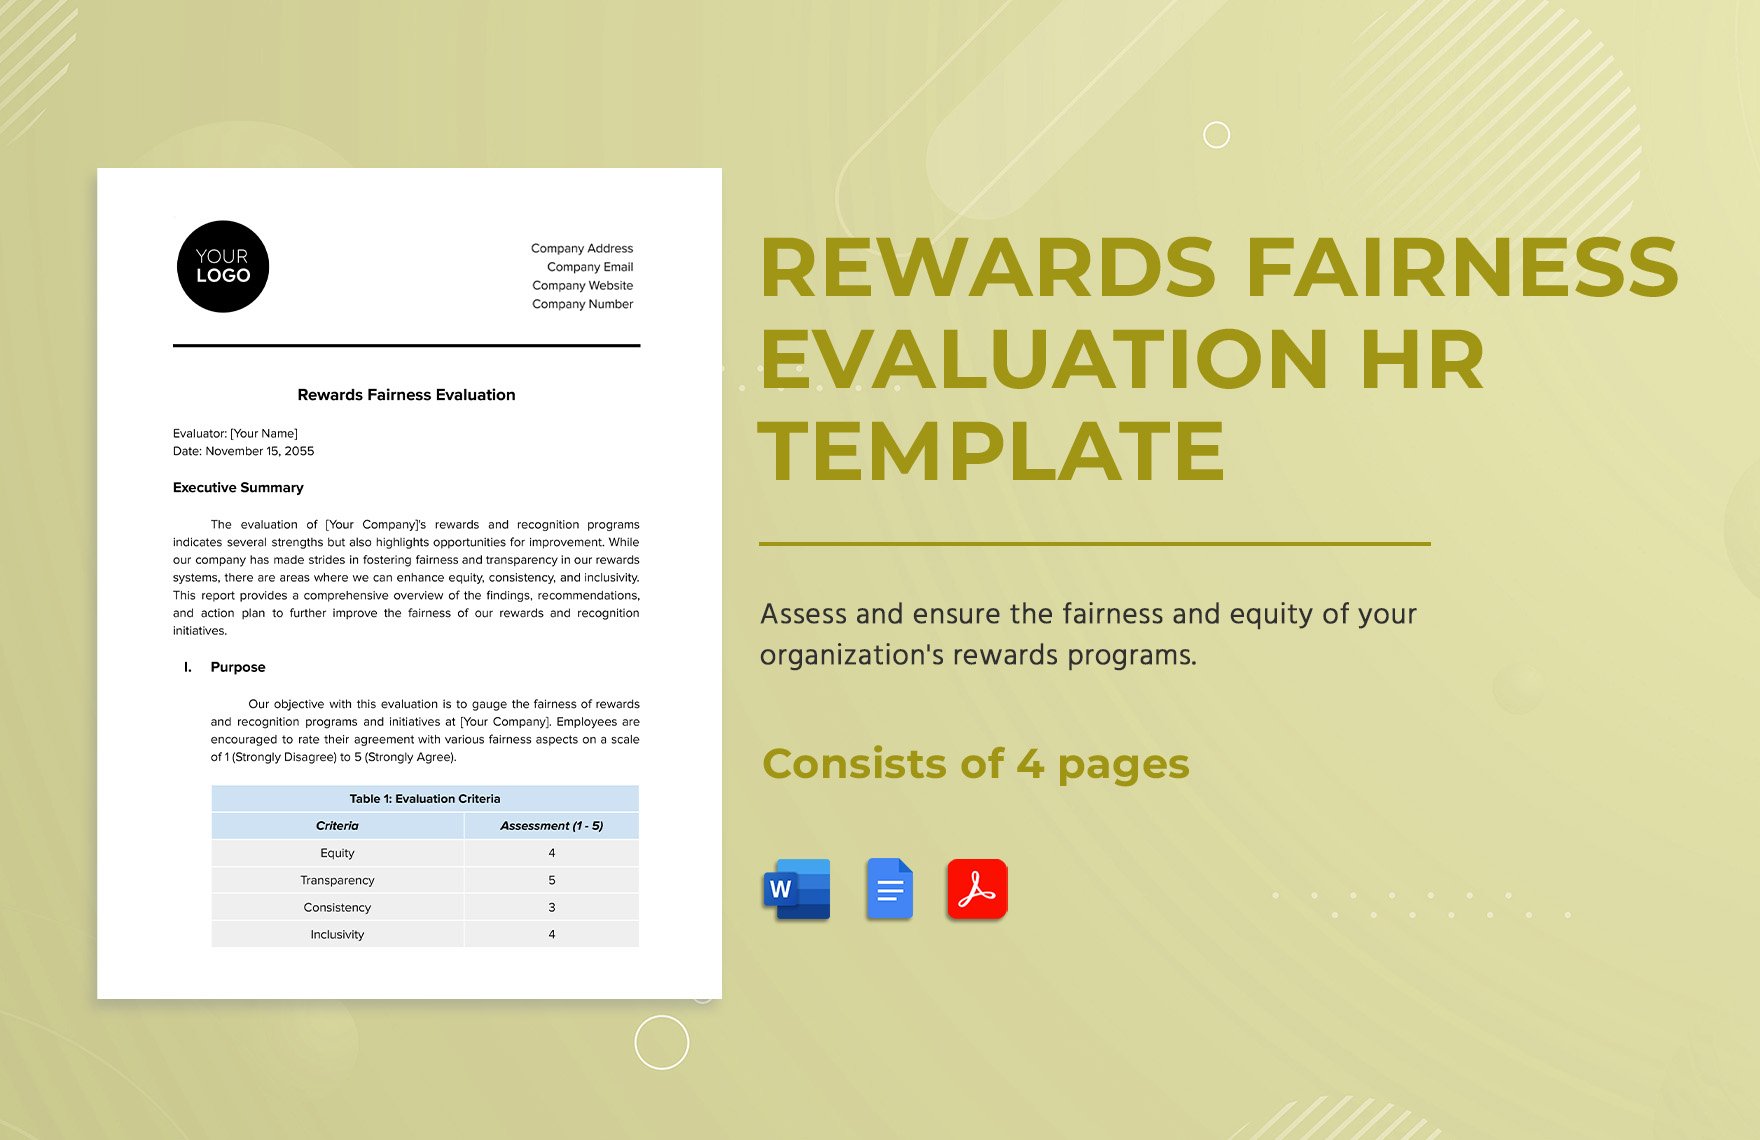 Rewards Fairness Evaluation HR Template